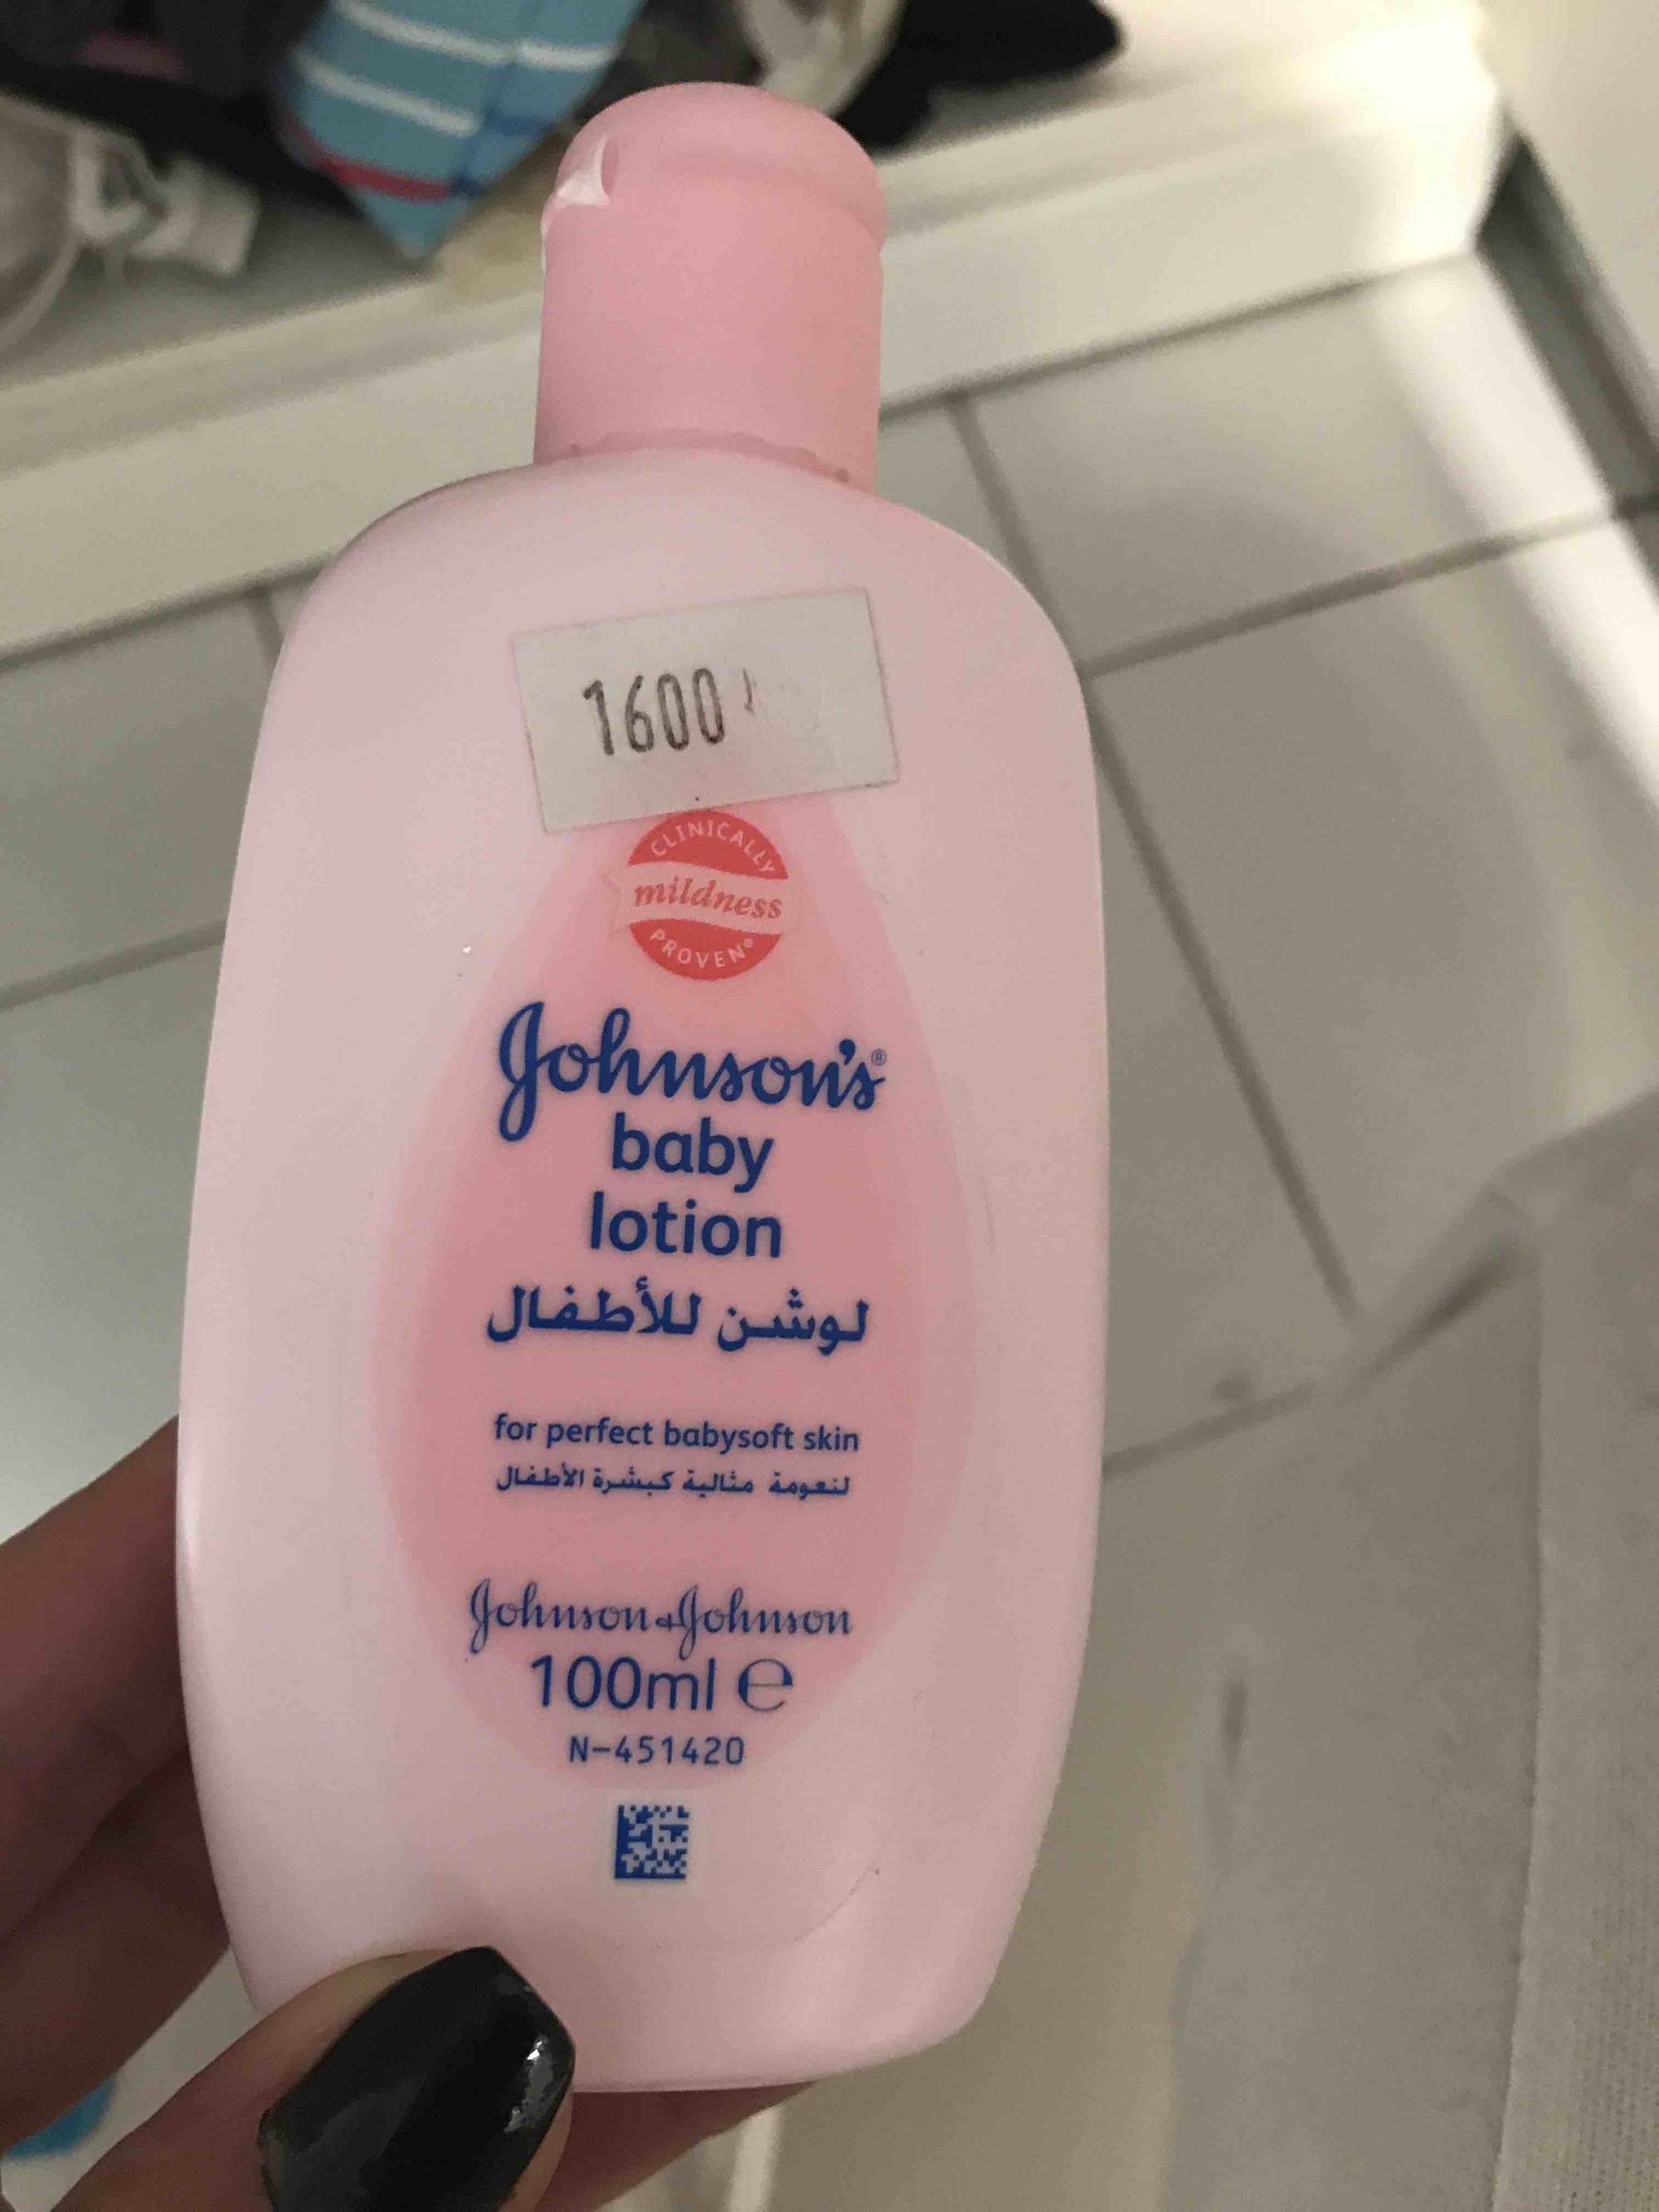 JOHNSON'S - Johnson & Johnson - Baby lotion